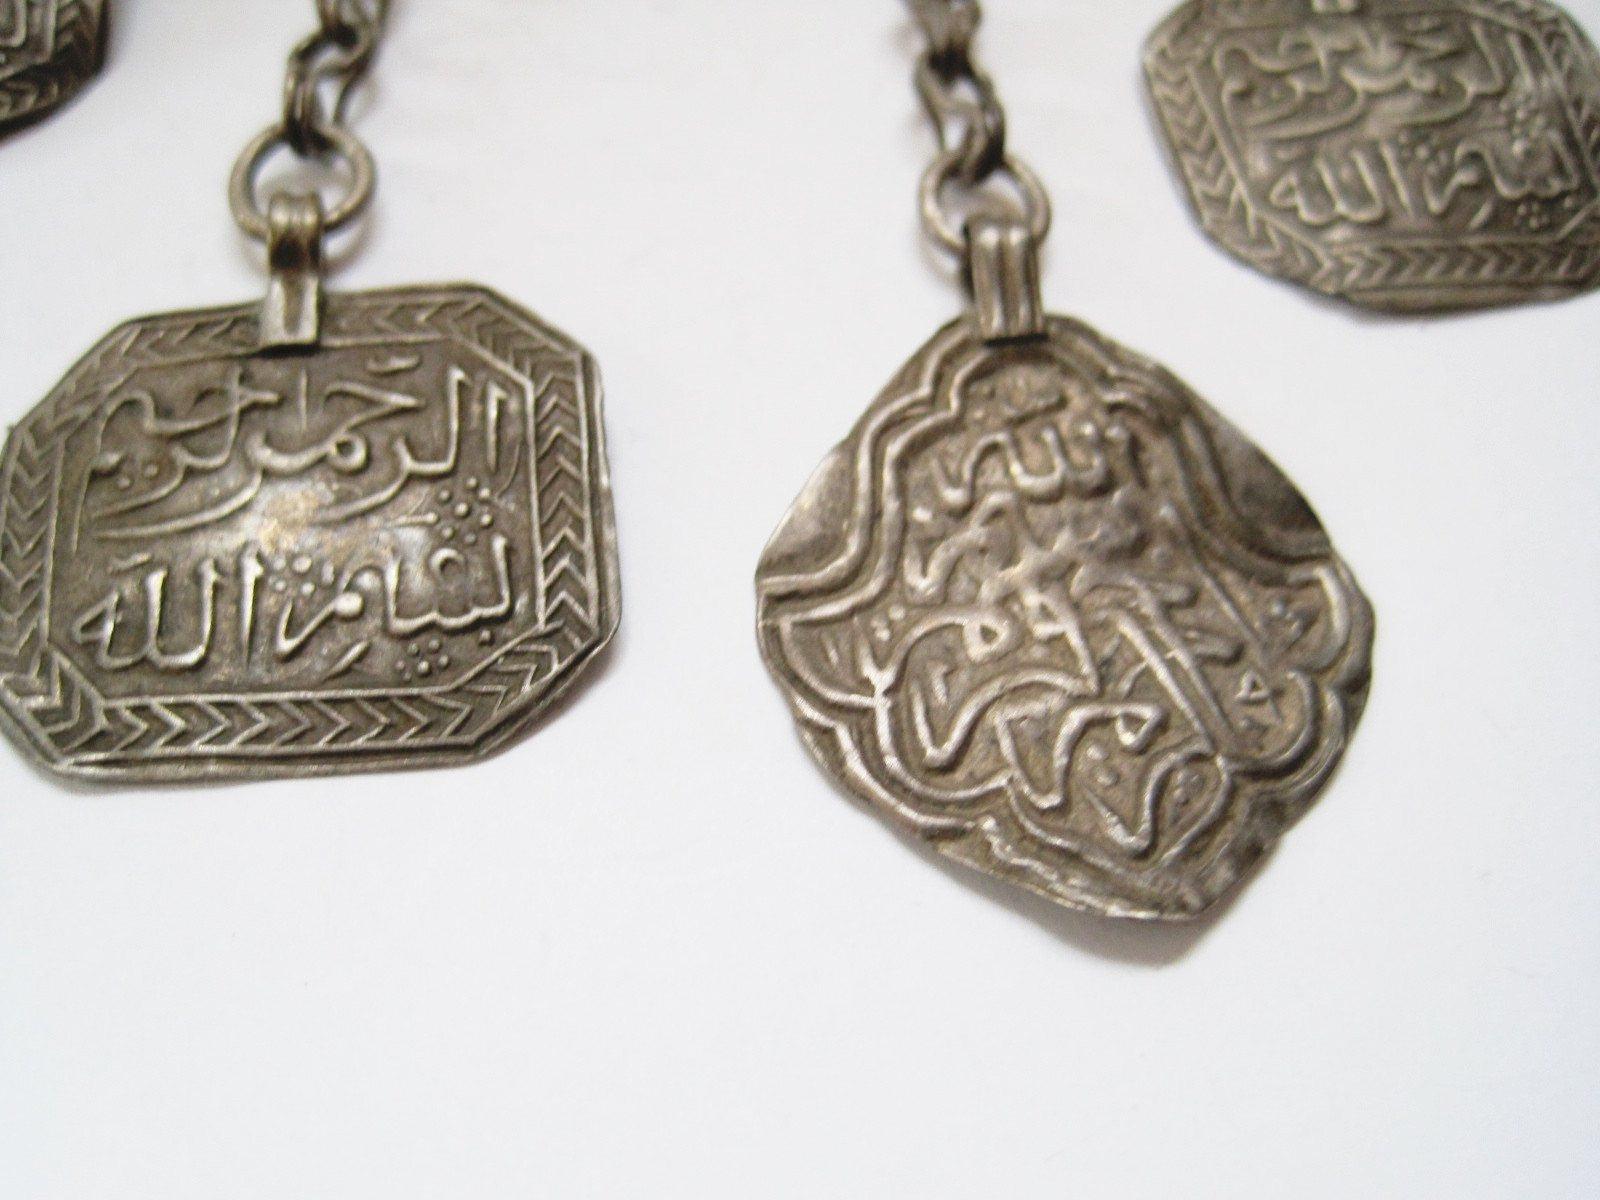 Islamic pendant necklace